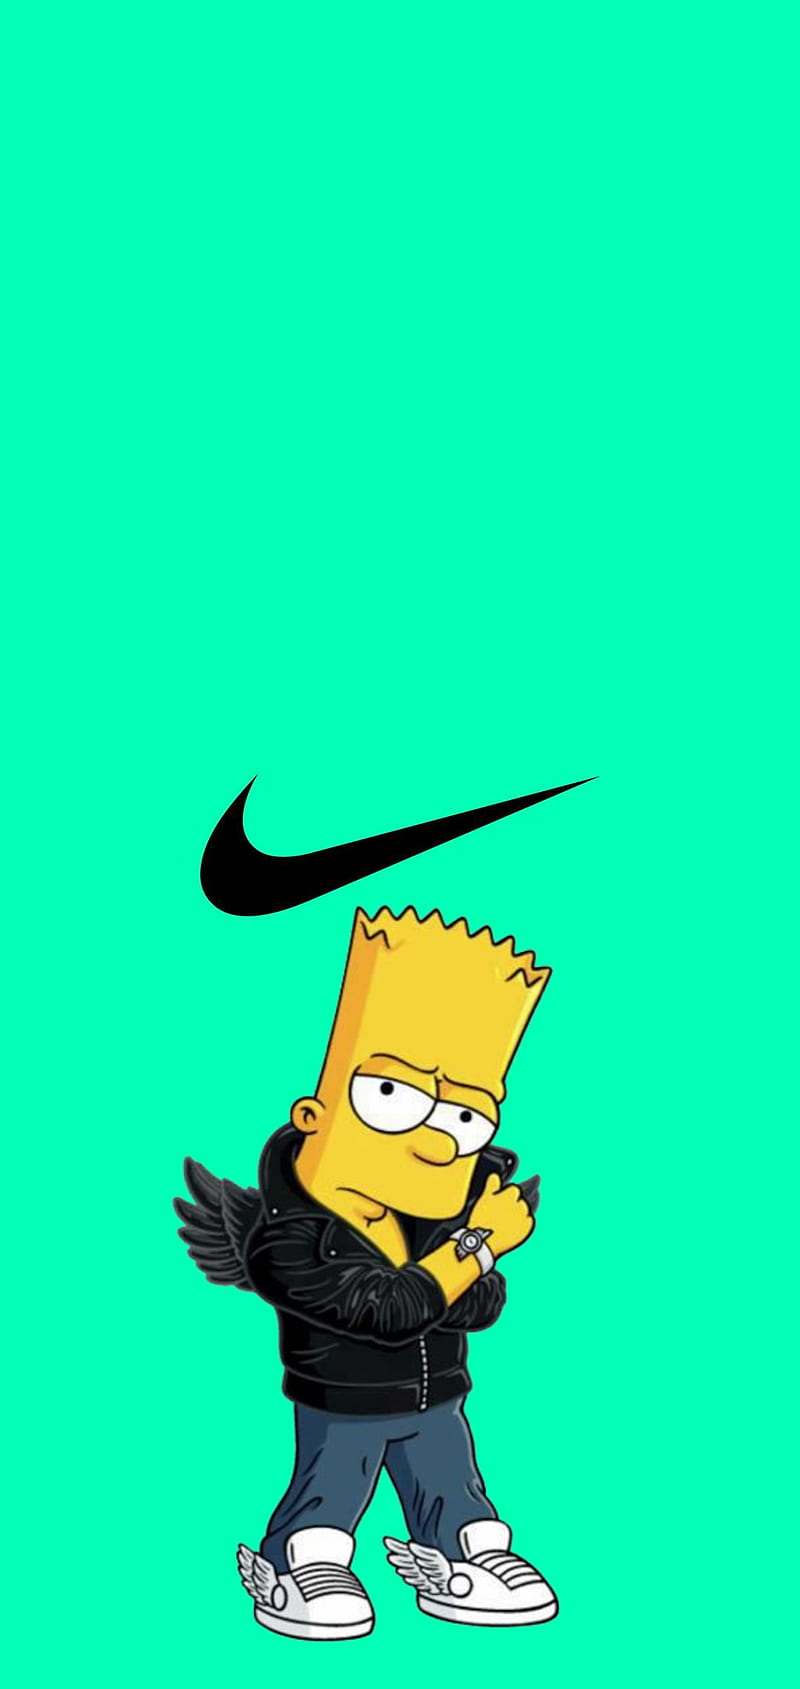 Cool Bart Simpson Wallpaper - NawPic